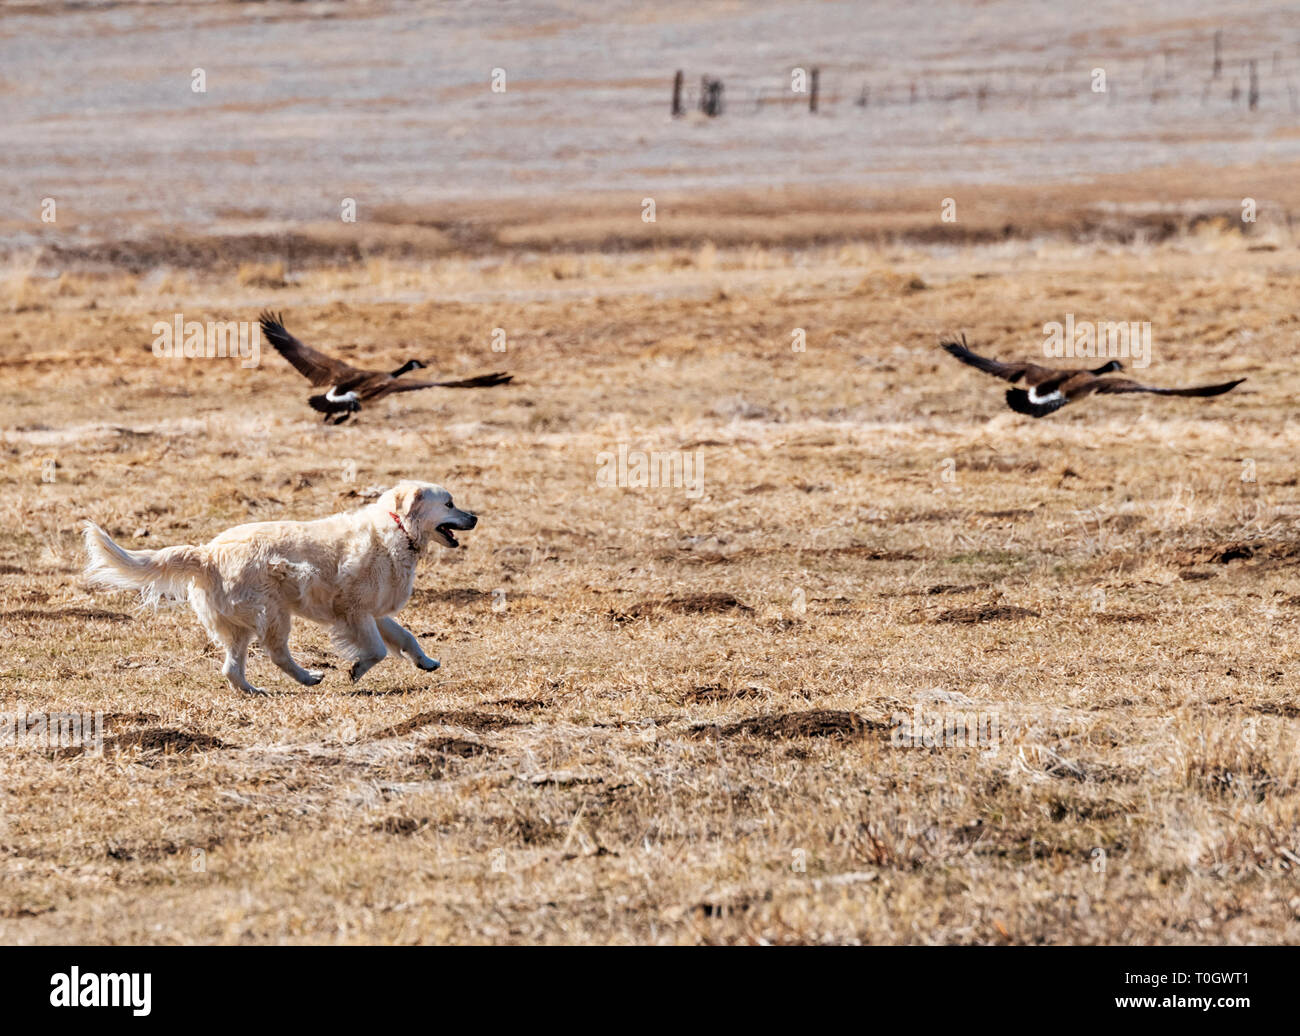 Platinum colored Golden Retriever dog chasing Canada Geese on a central Colorado Ranch; USA Stock Photo